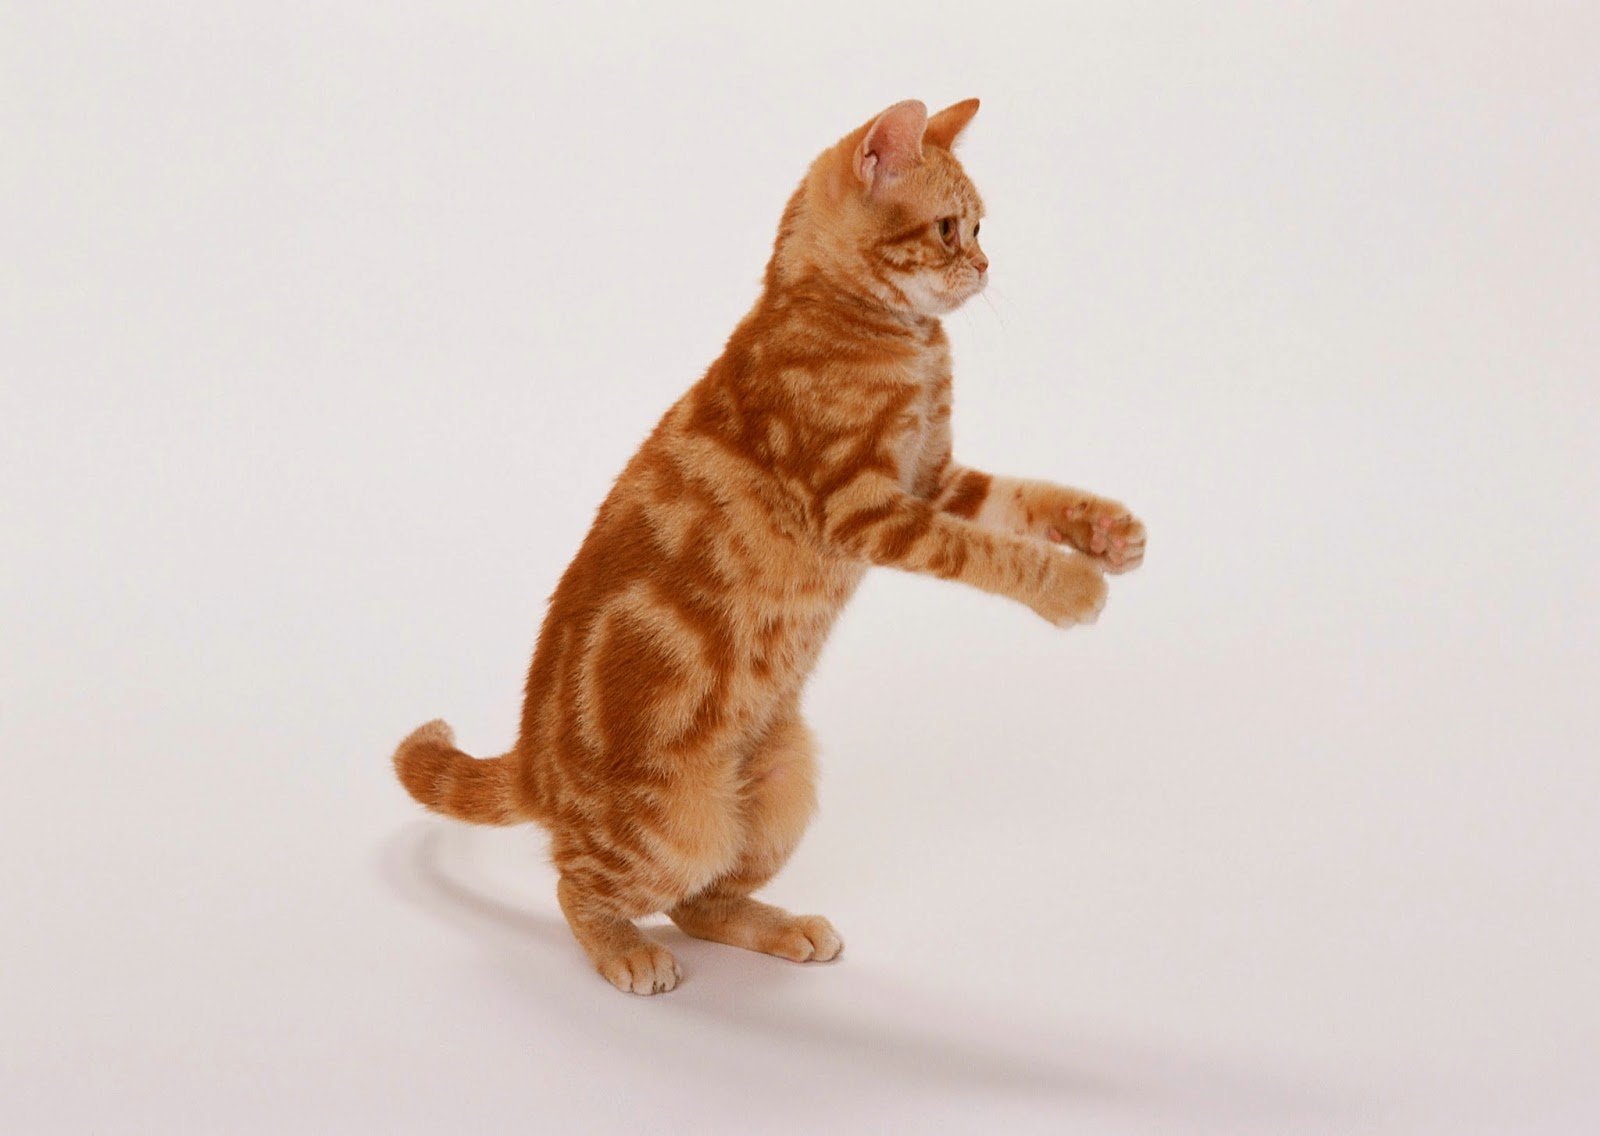 Котик на задних лапках. Котик на задних лапах. Рыжий кот на задних лапах. Кротик на задних лапках. Кошка стоит на задних лапах.